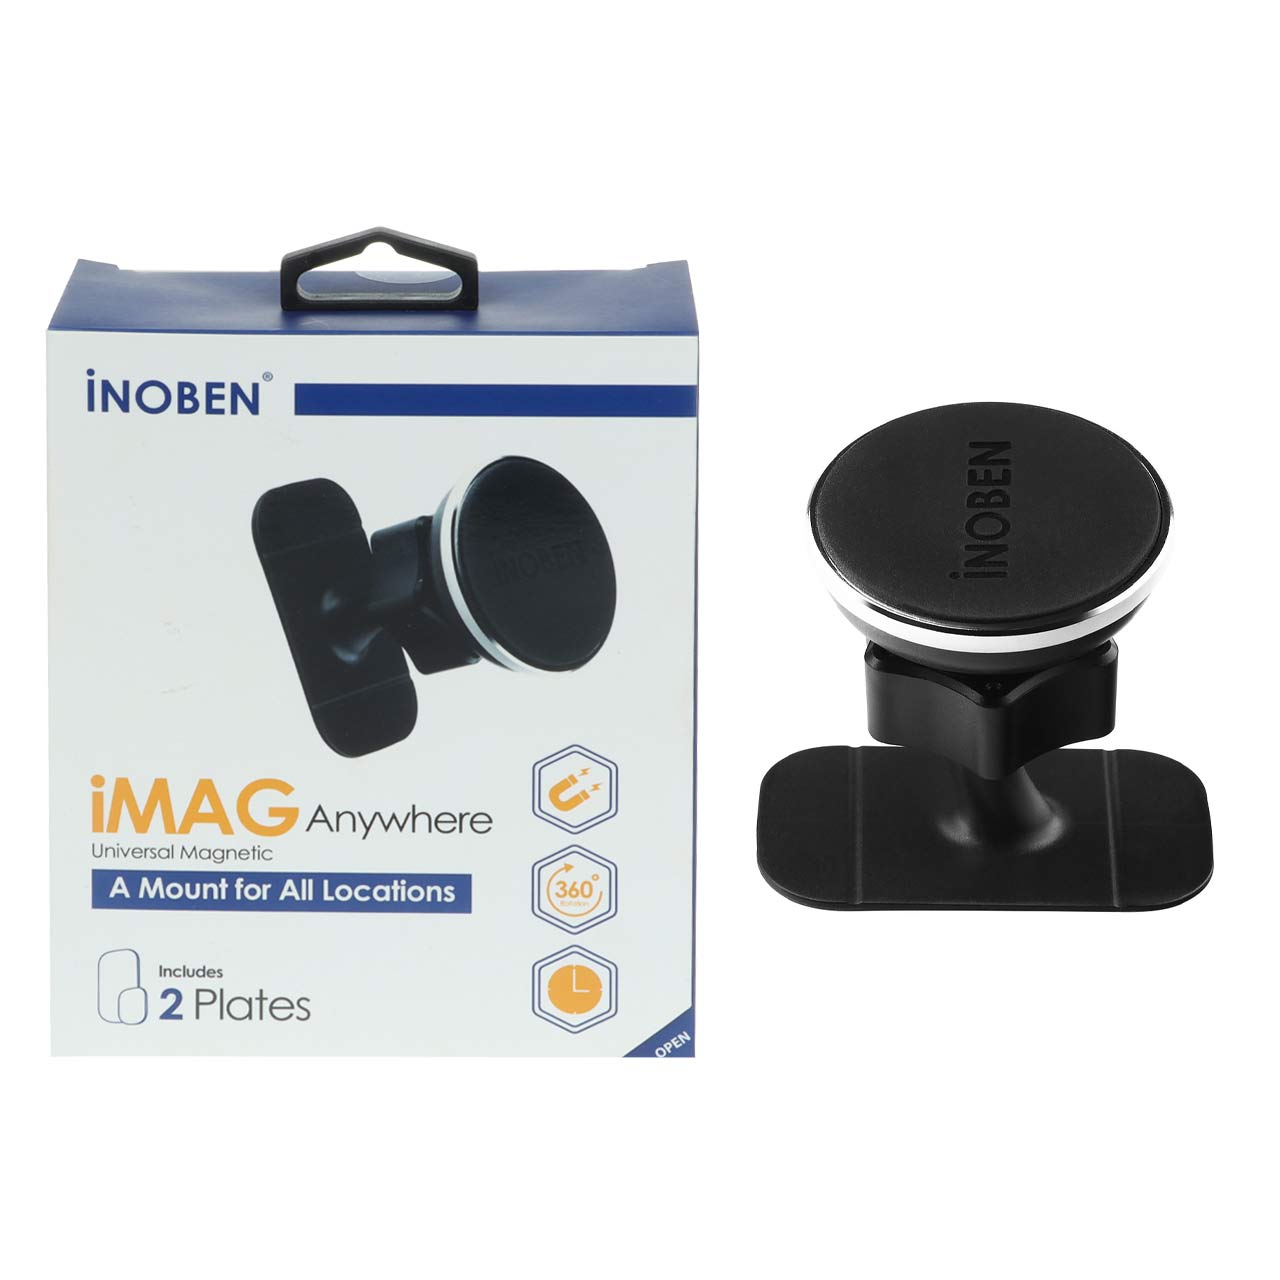 هولدر گوشی موبایل مگنتی iNOBEN مدل iMag Anywhere - مشکی